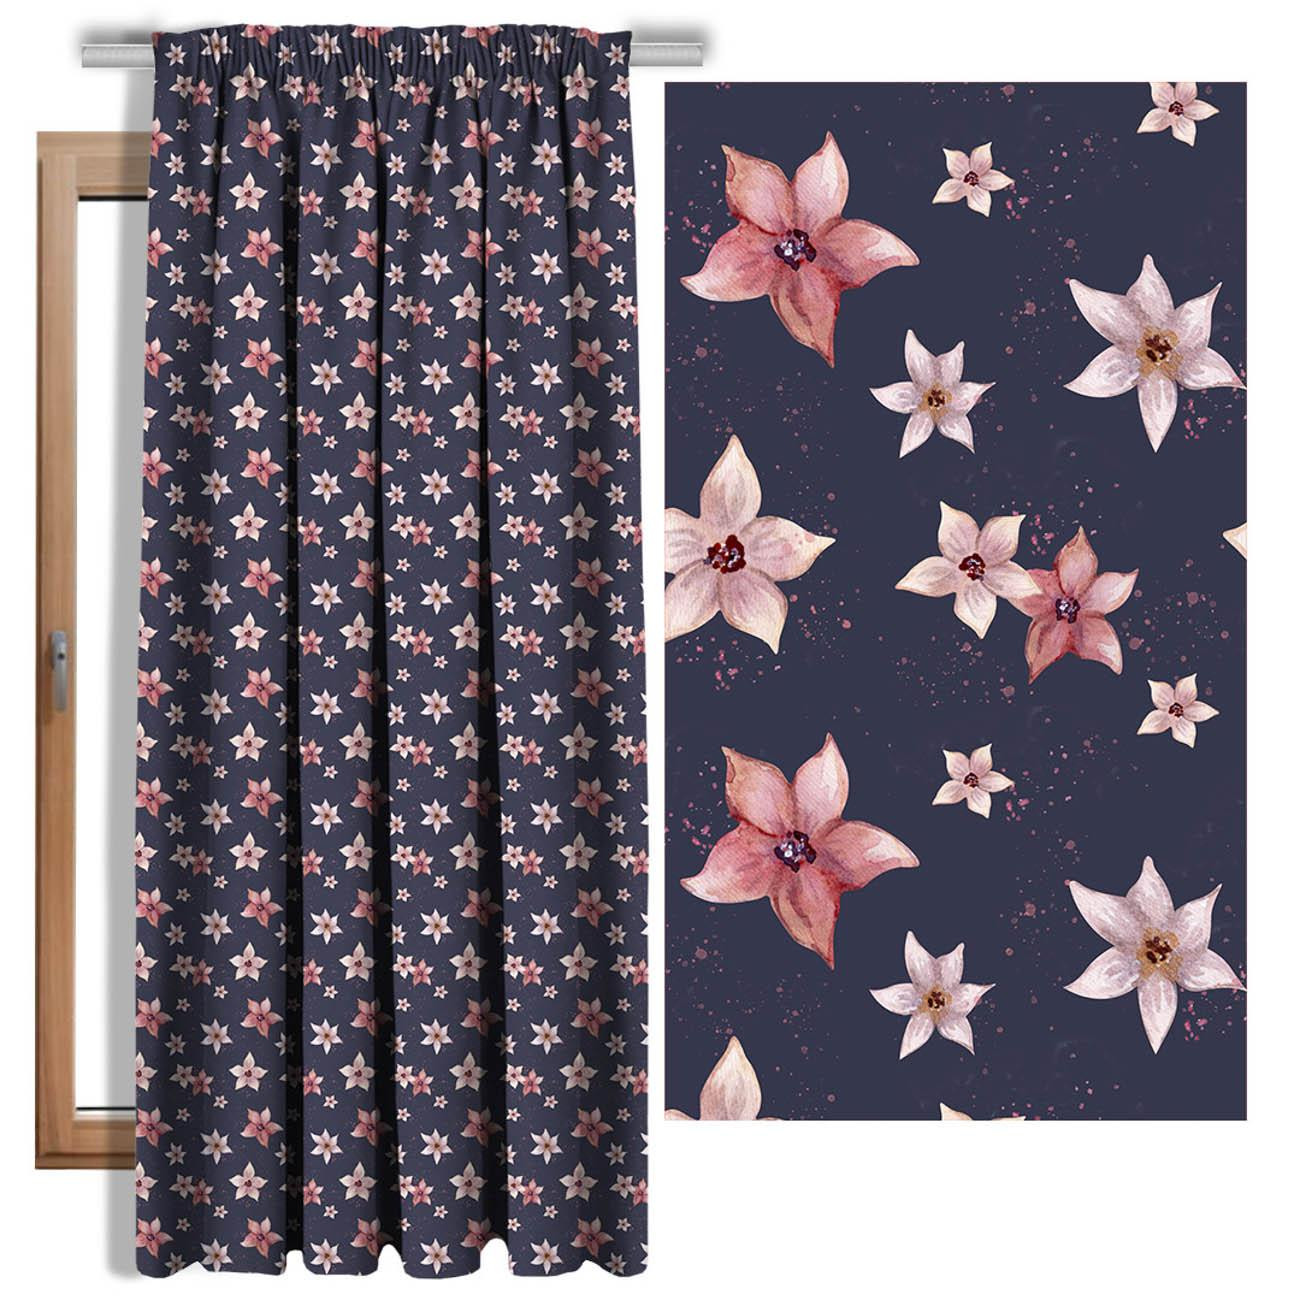 DRAGON FLOWERS PAT. 2 - Blackout curtain fabric